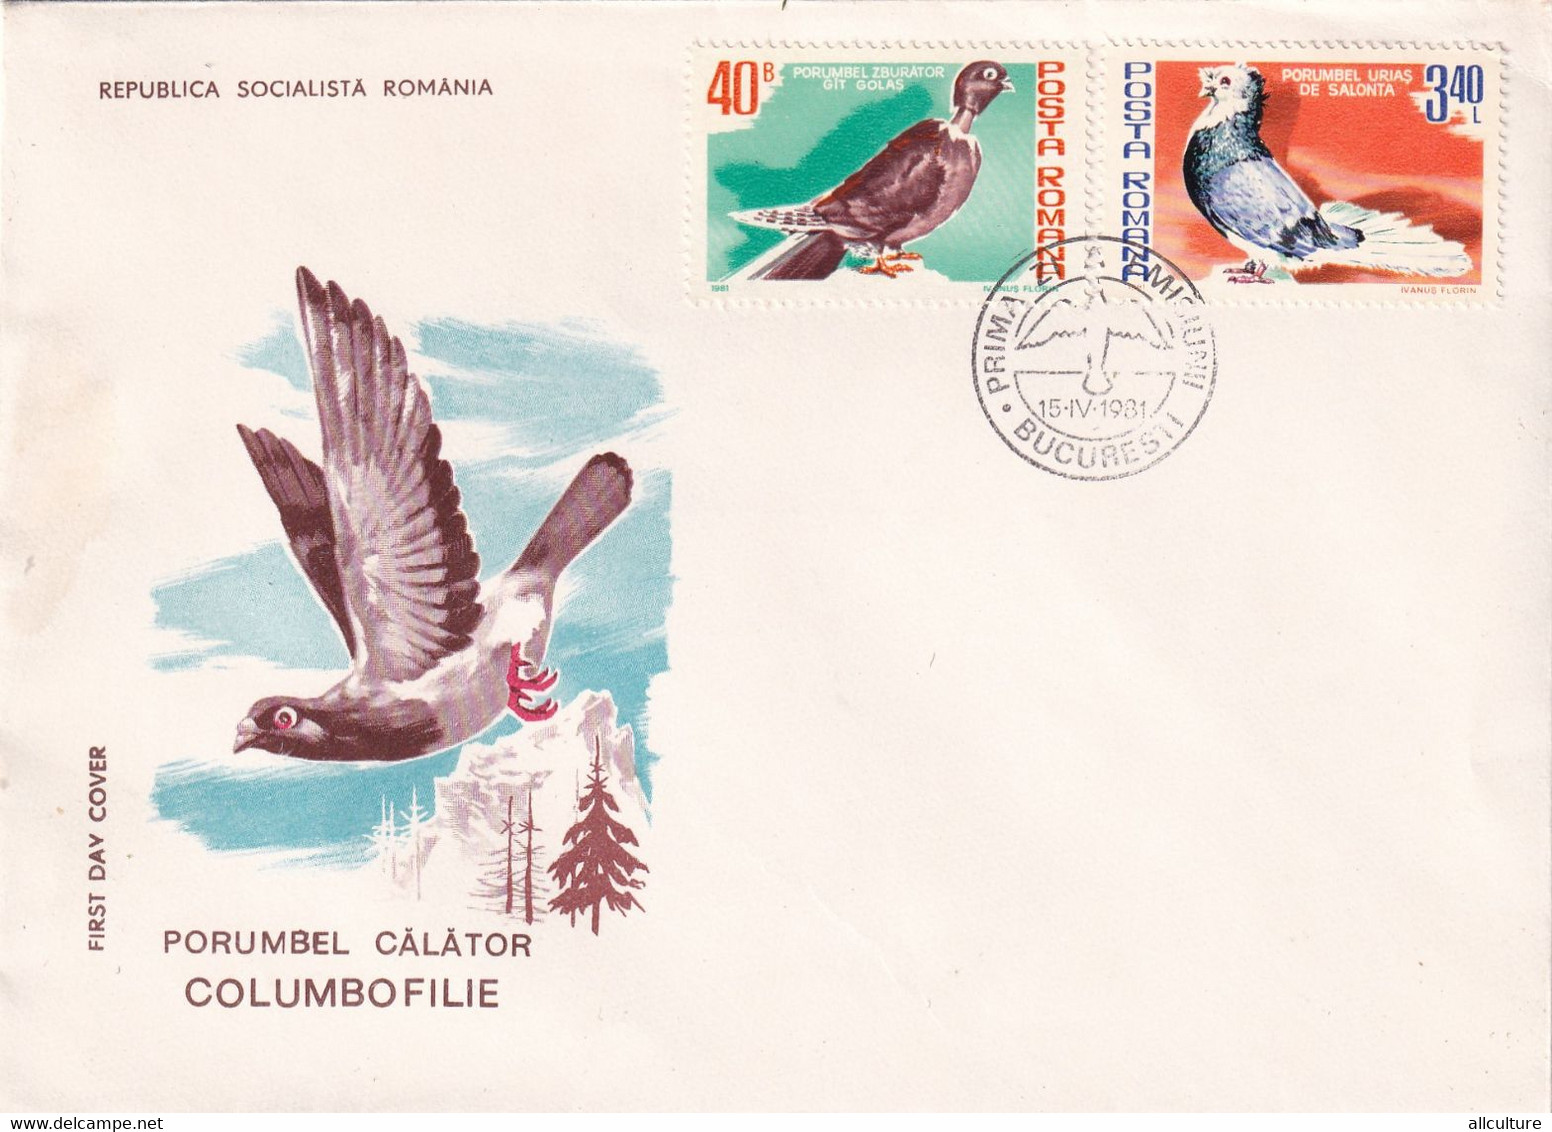 A2921- Columbiformes, Pigeon Birds, Republica Socialista Romania, Bucuresti 1981  3 Covers FDC - Piccioni & Colombe